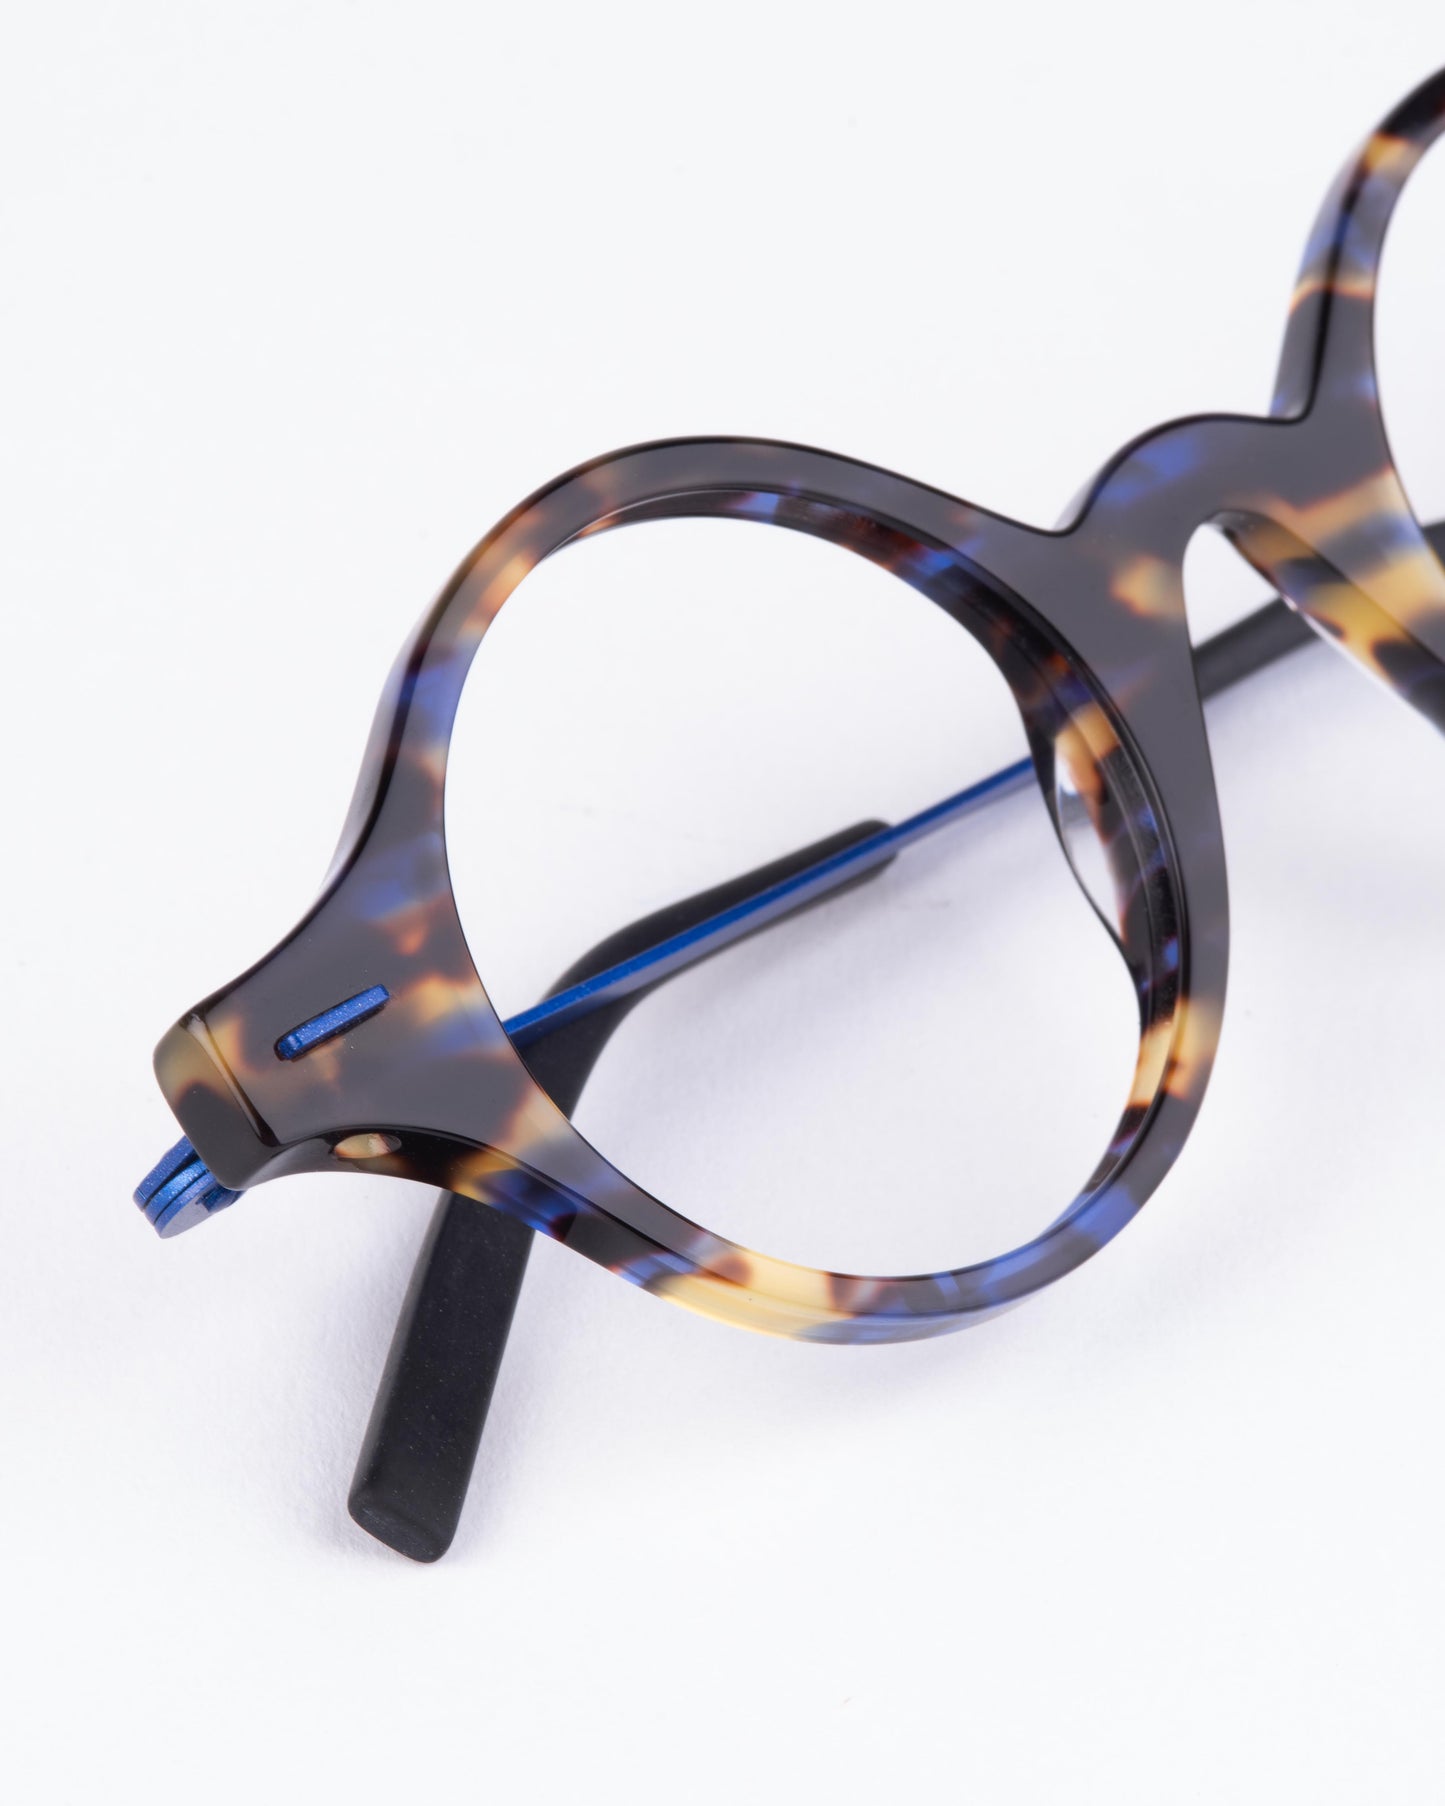 Theo - Aartappel - 15 | Bar à lunettes